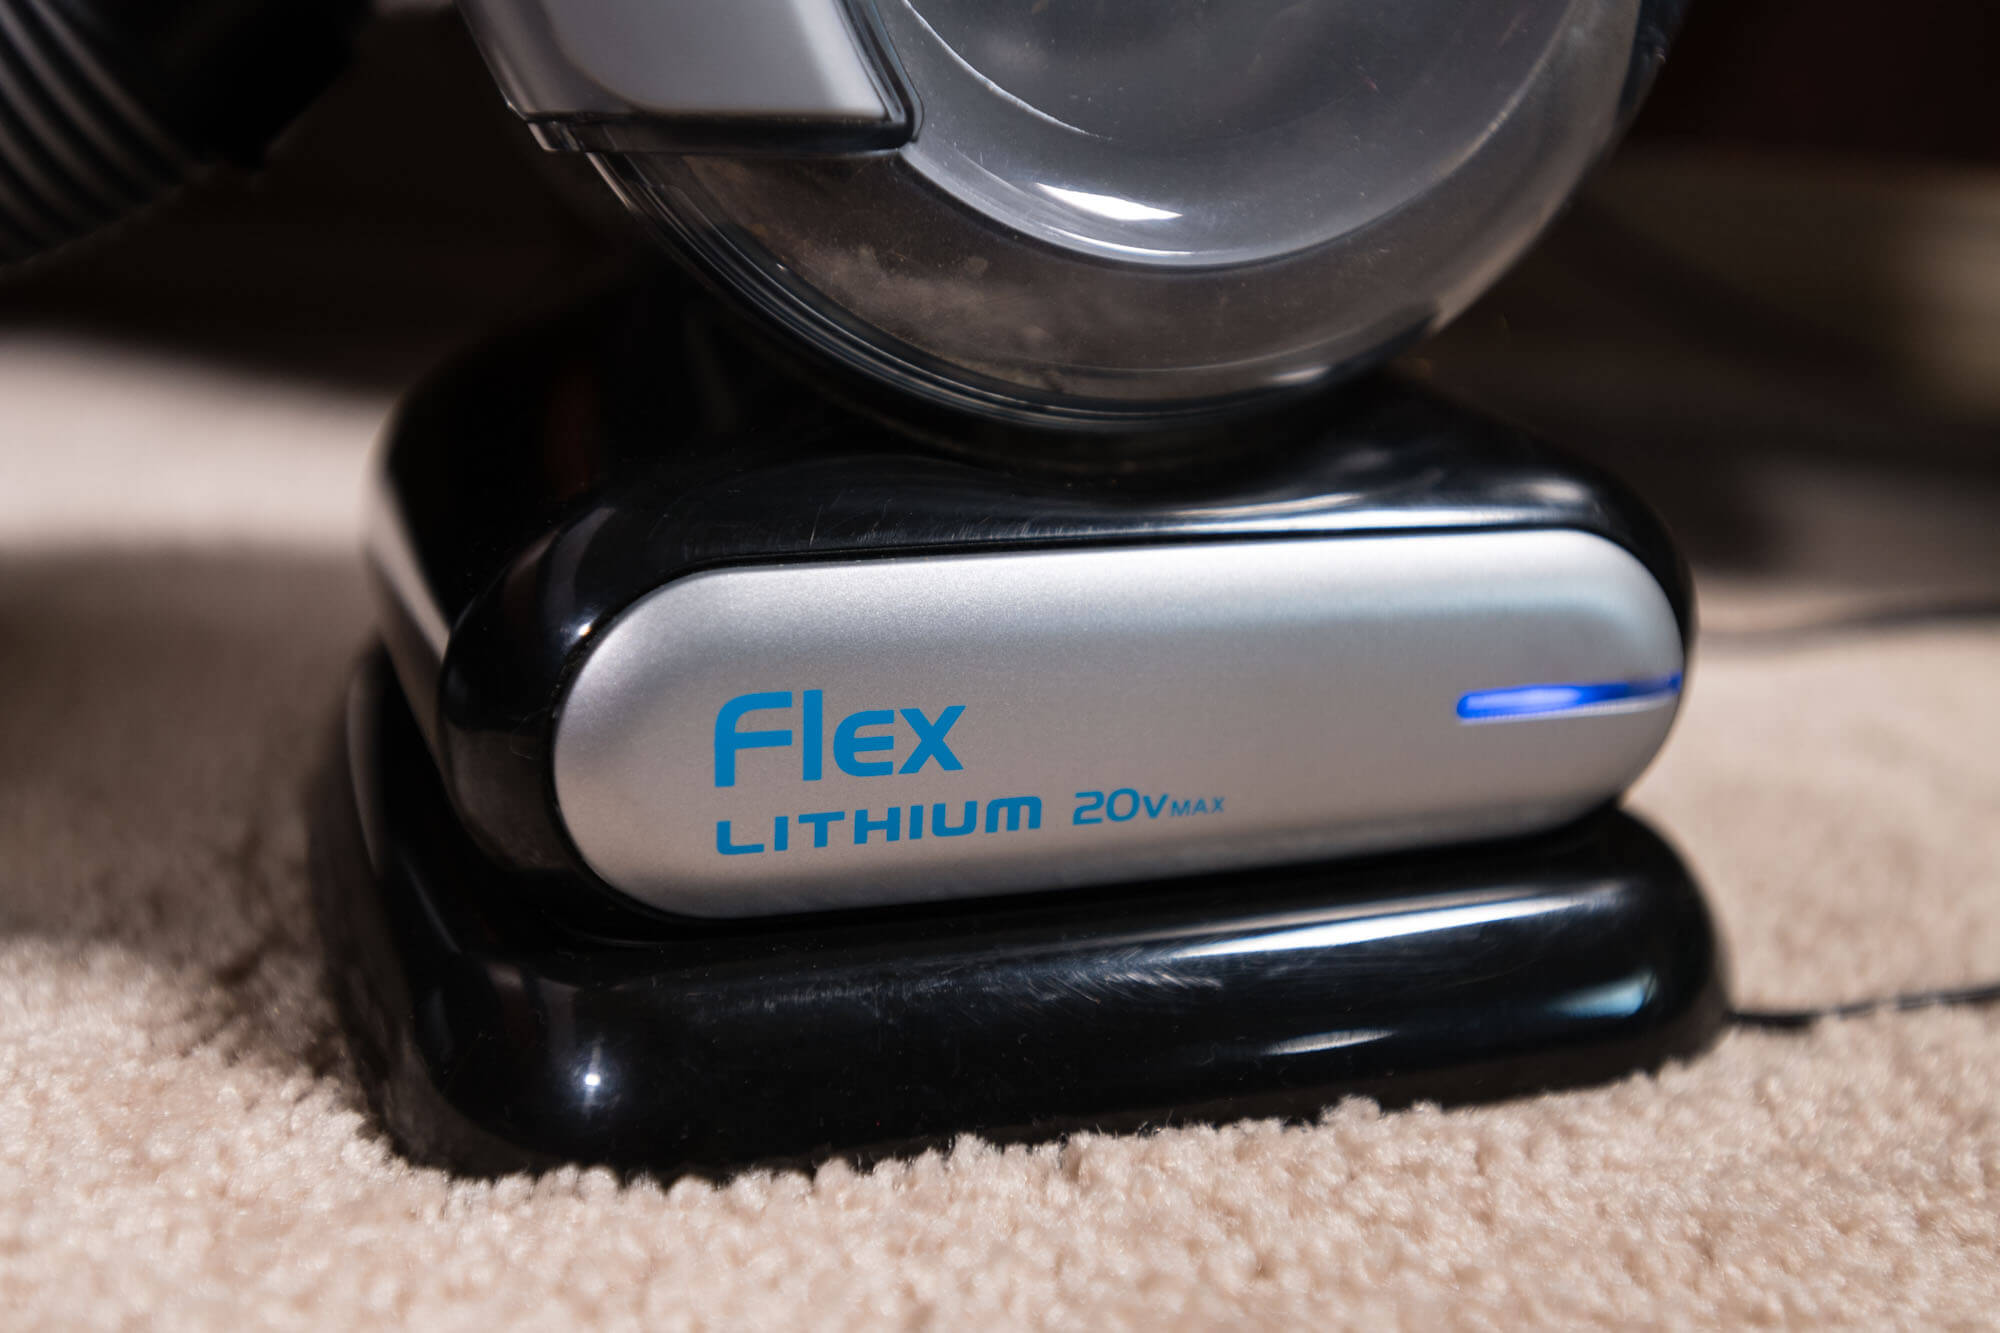 Black + Decker MAX Litihum Flex Vacuum review